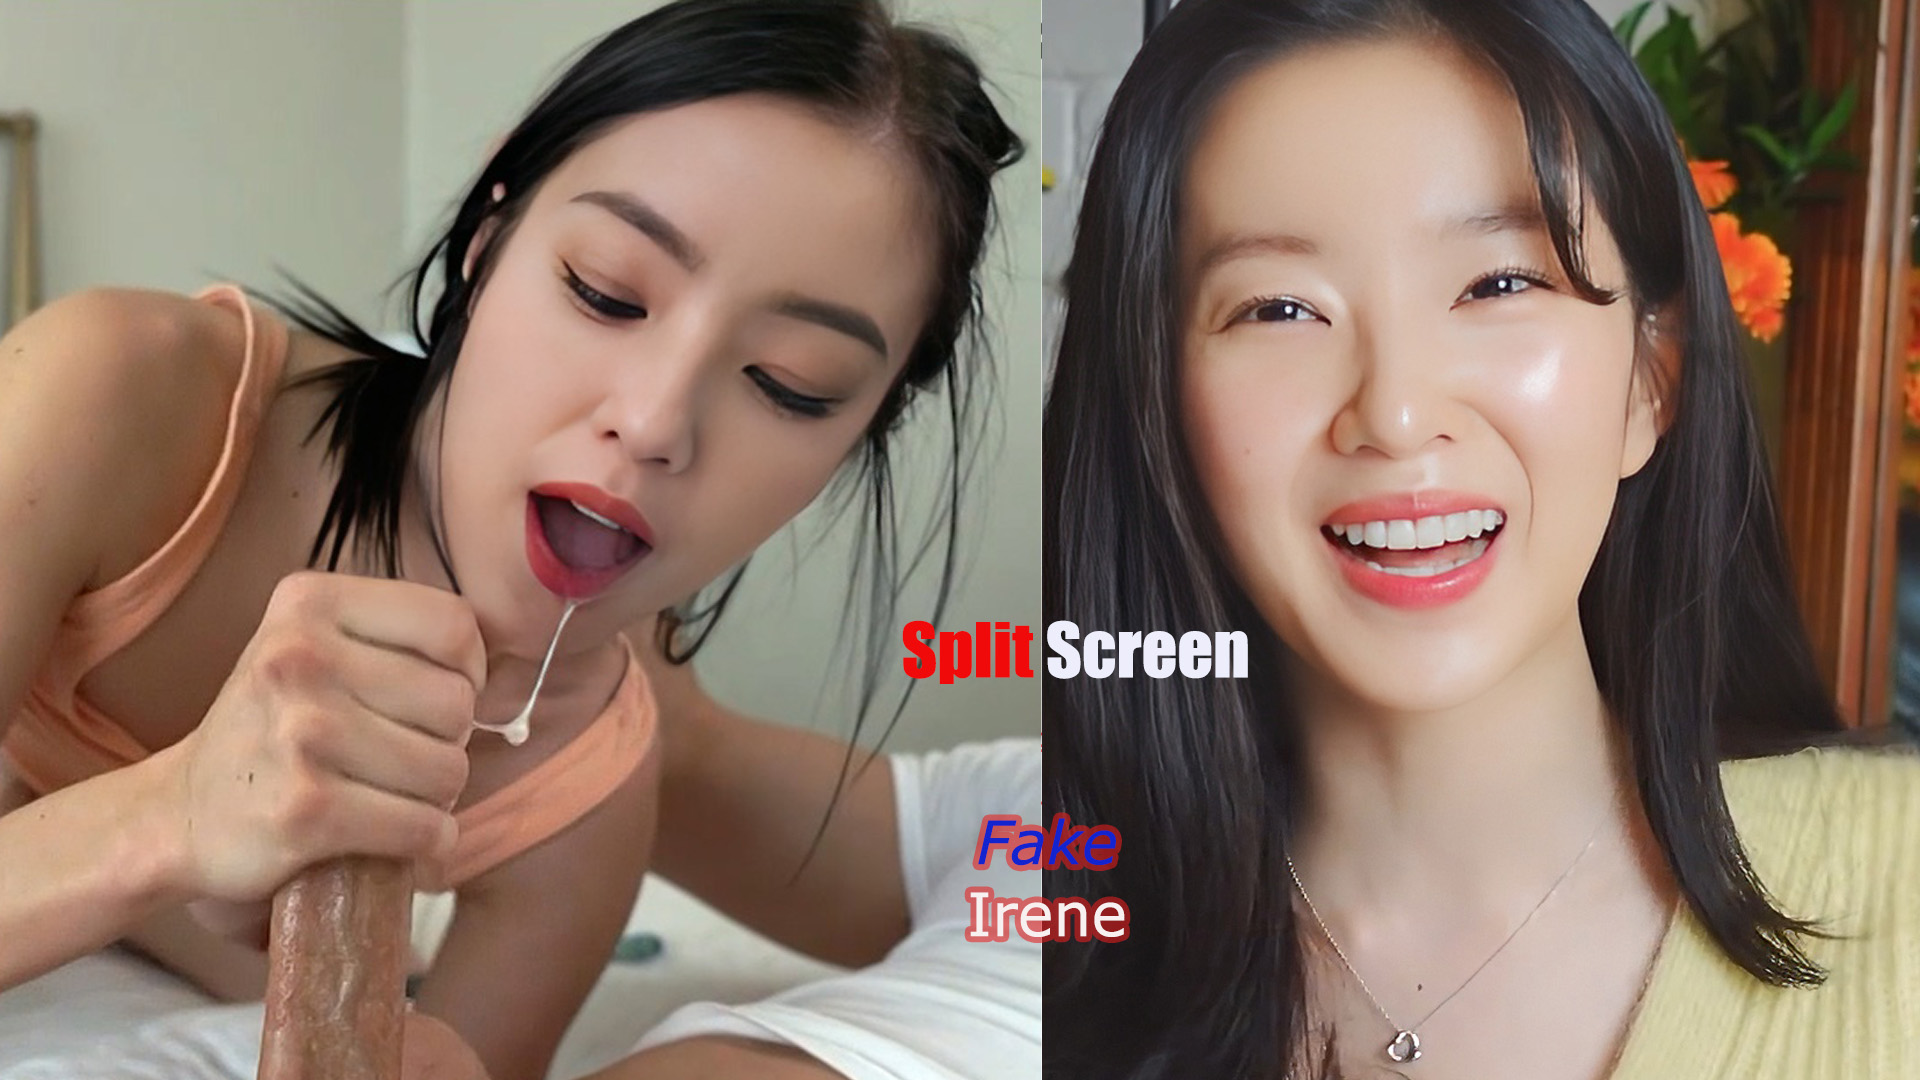 Fake Irene (trailer) -1- / Split Screen / Free Download